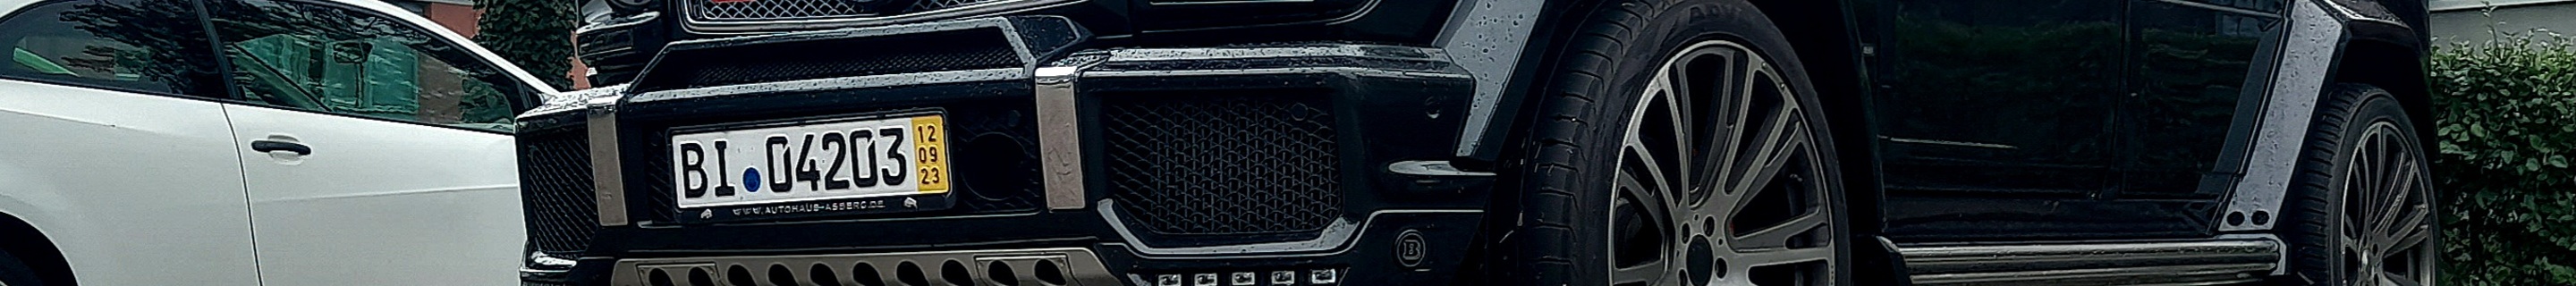 Mercedes-AMG Brabus G 63 2016